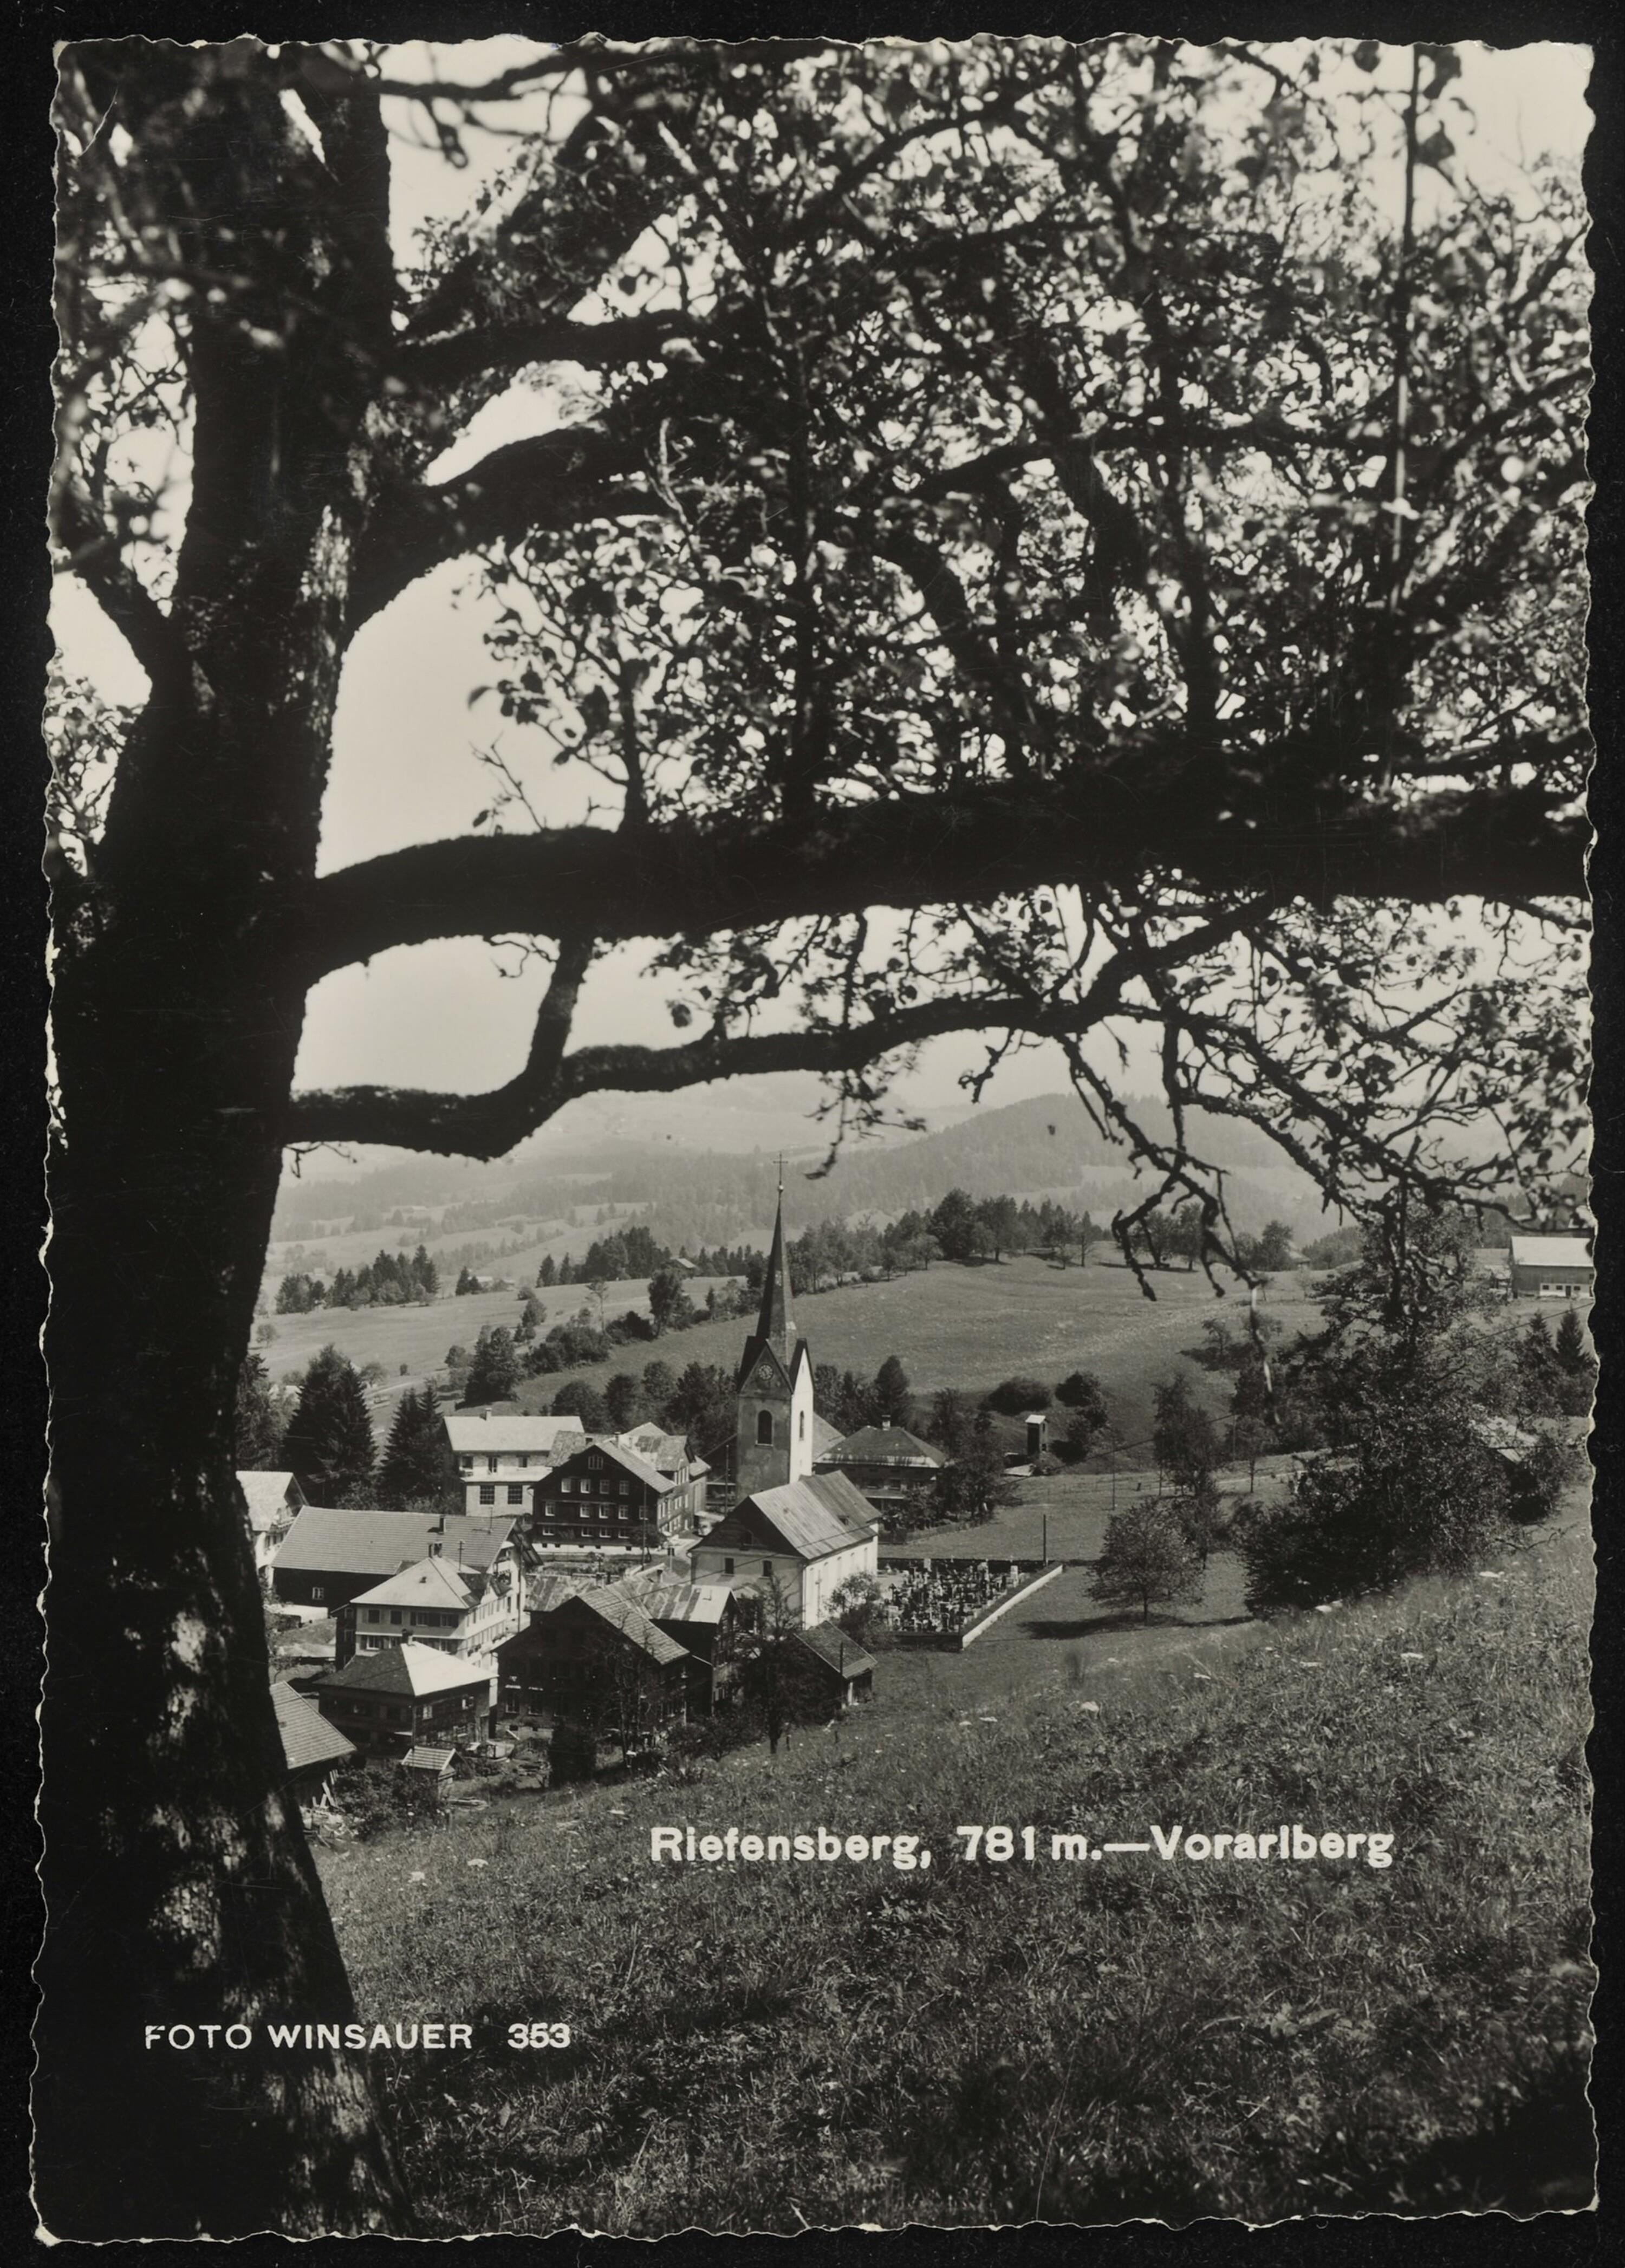 Riefensberg, 781 m. - Vorarlberg></div>


    <hr>
    <div class=